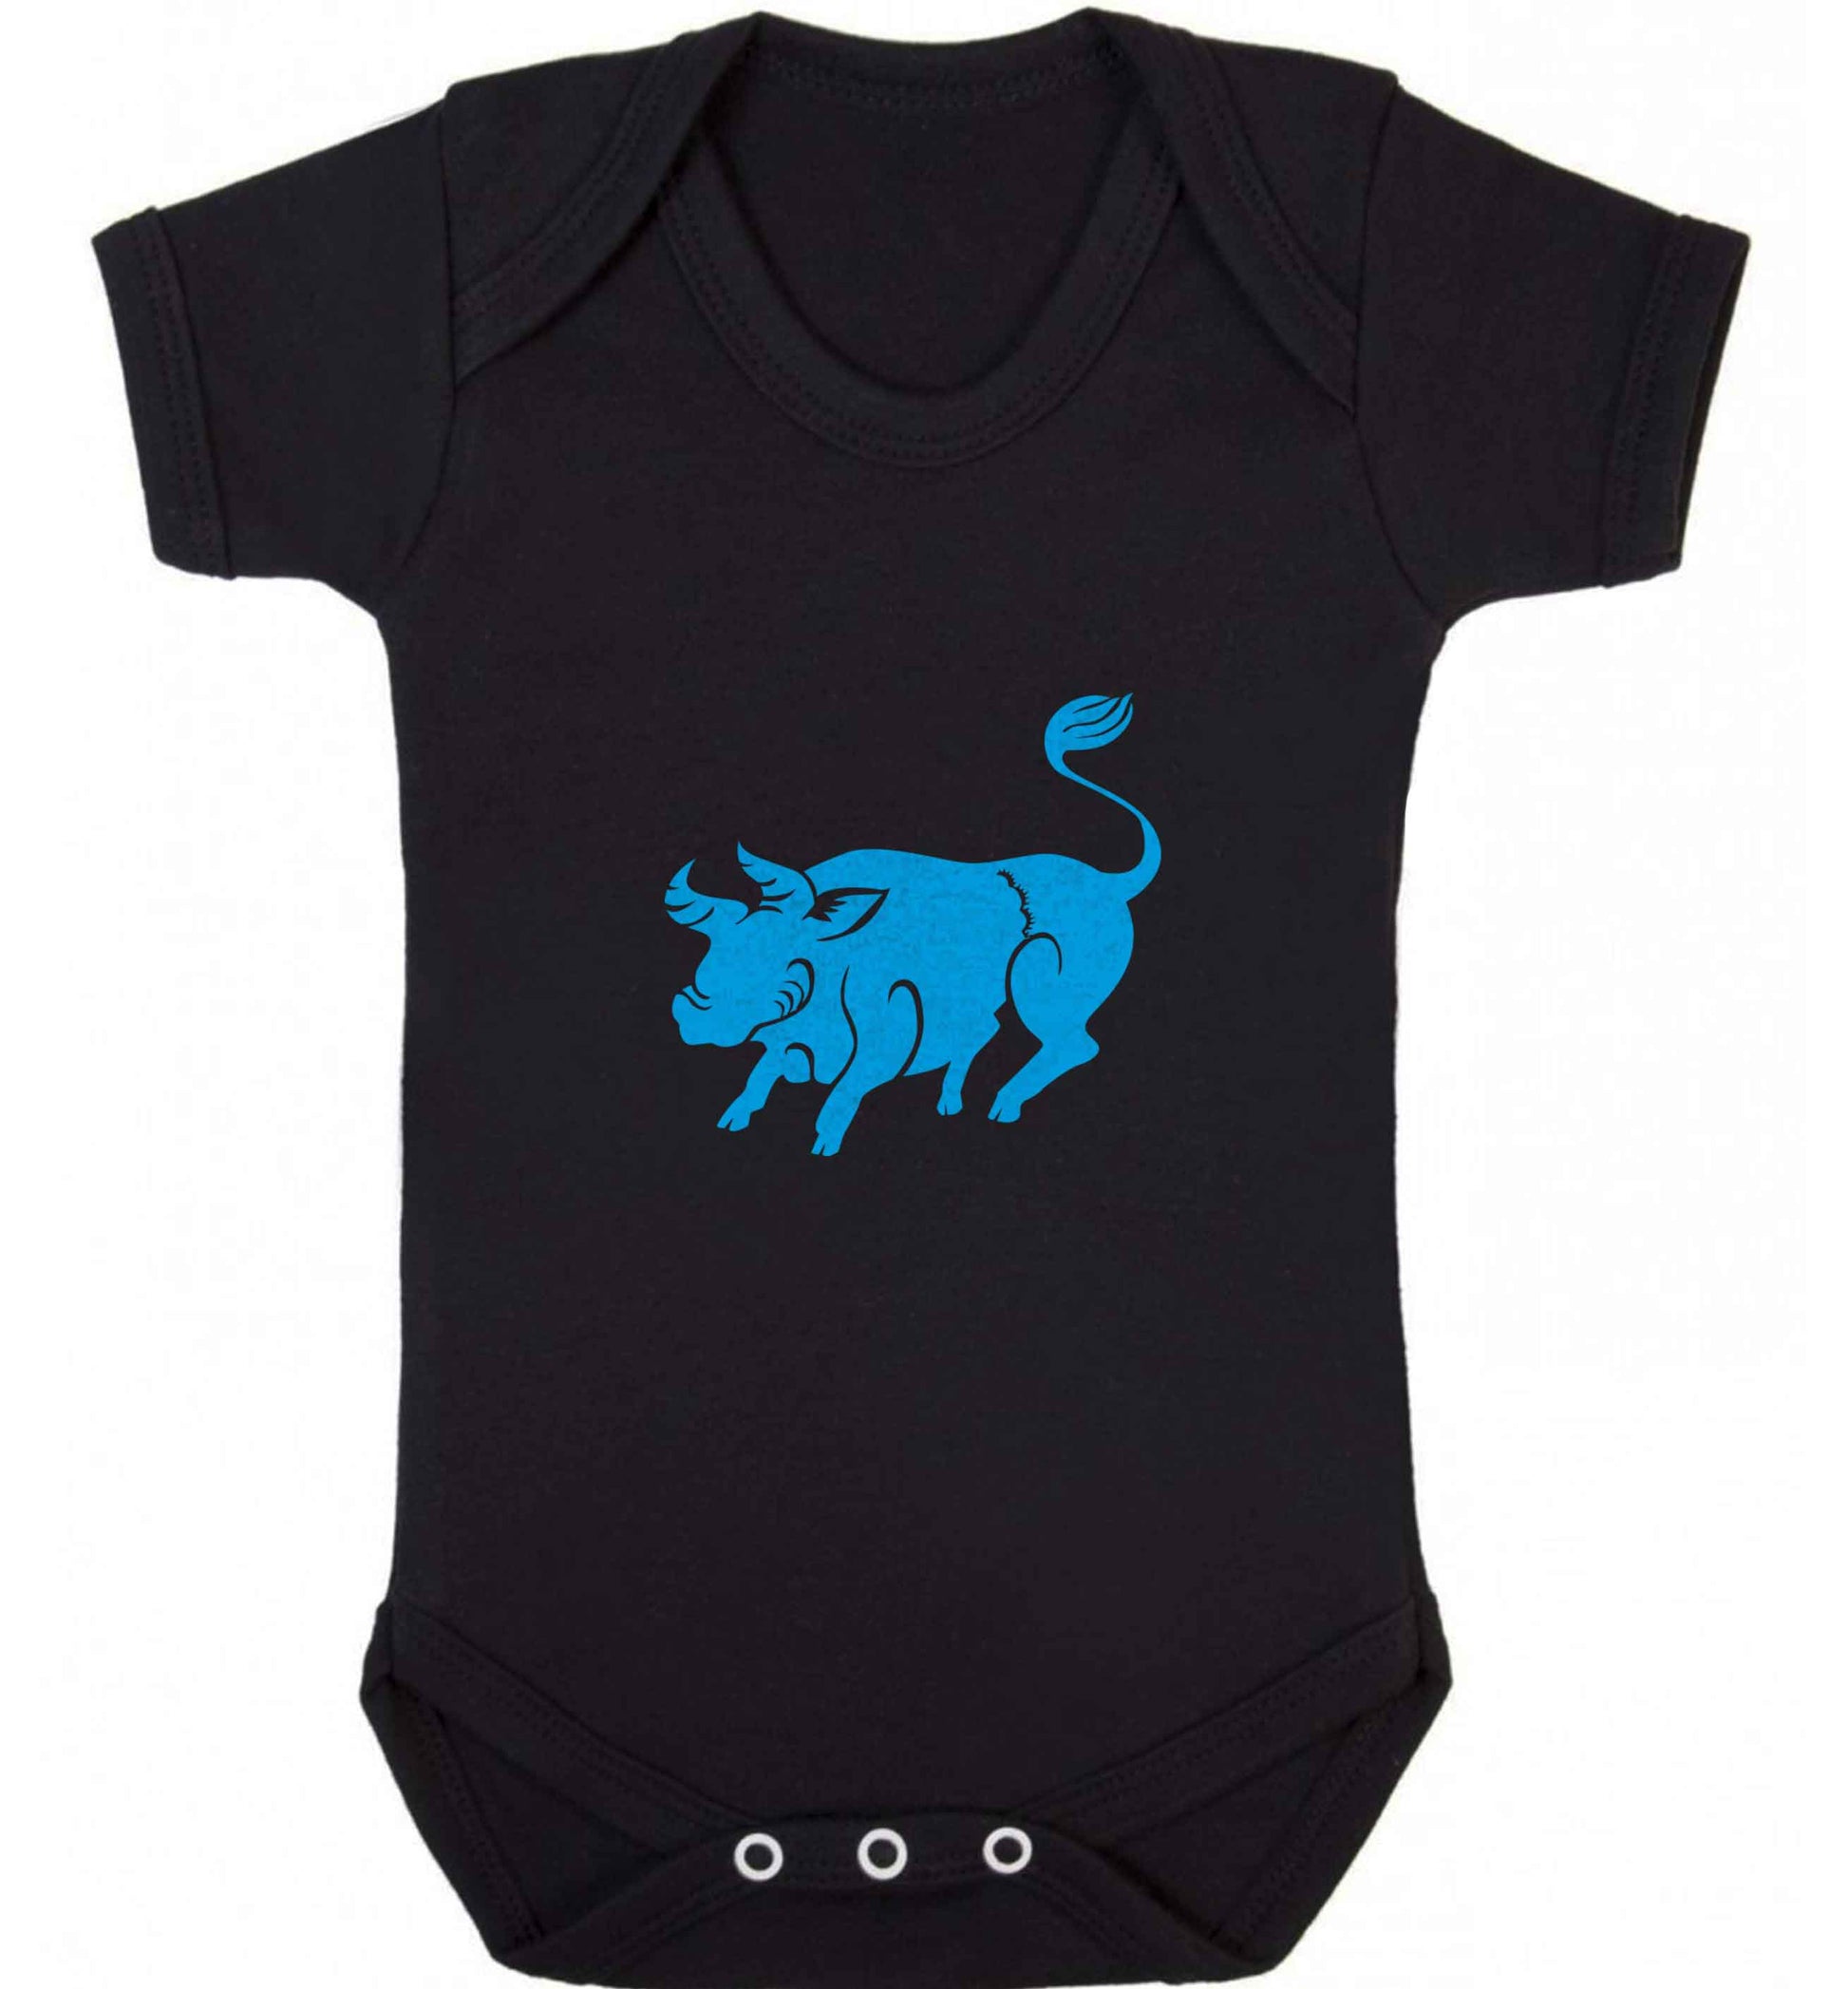 Blue ox baby vest black 18-24 months